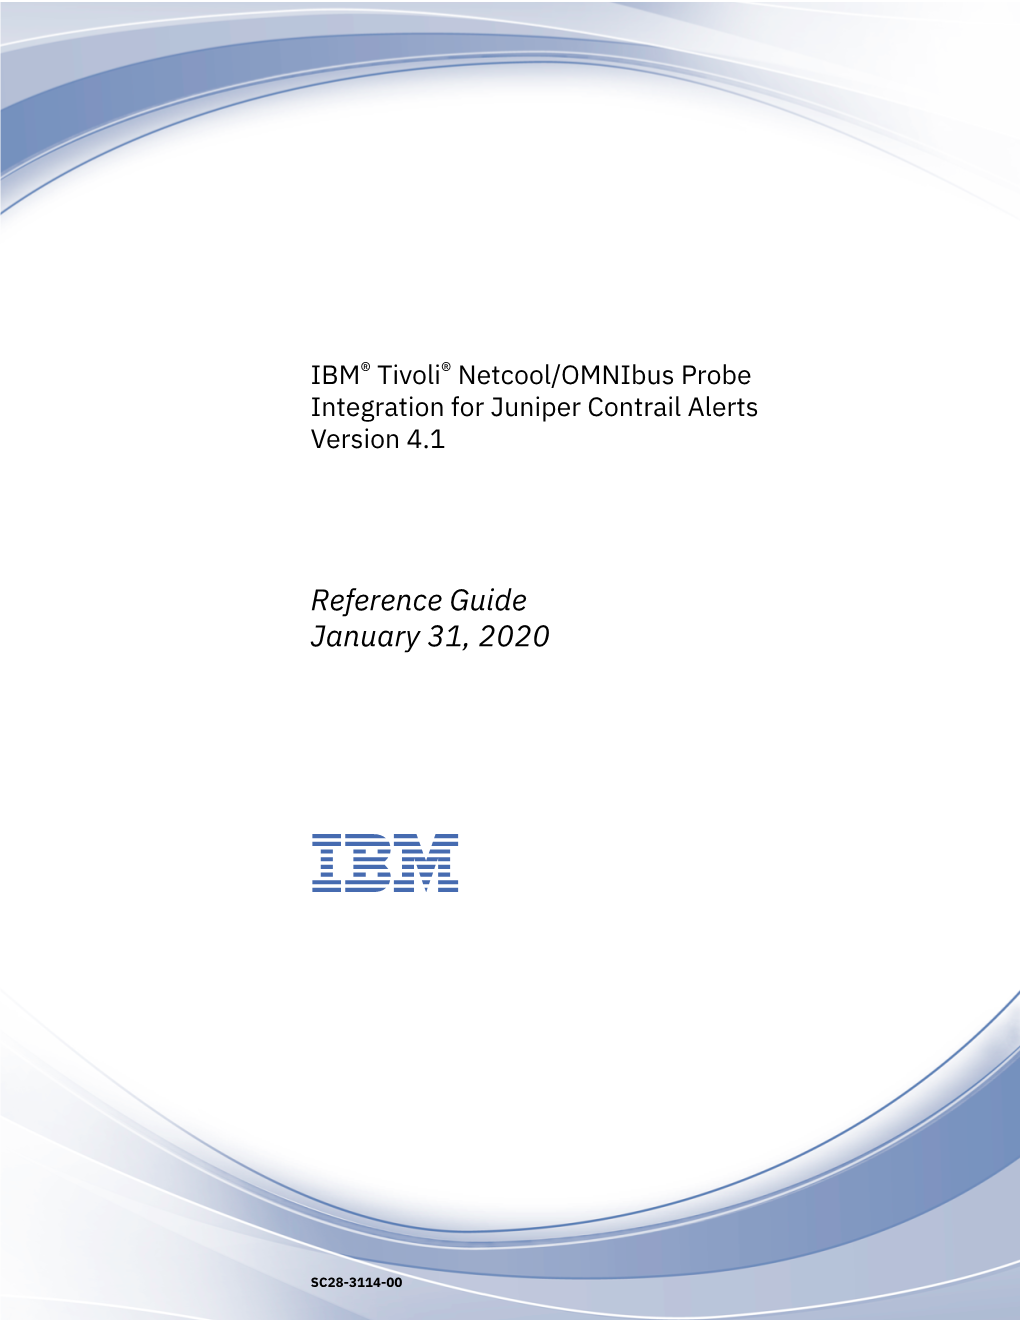 IBM Tivoli Netcool/Omnibus Probe Integration for Juniper Contrail Alerts: Reference Guide Chapter 1